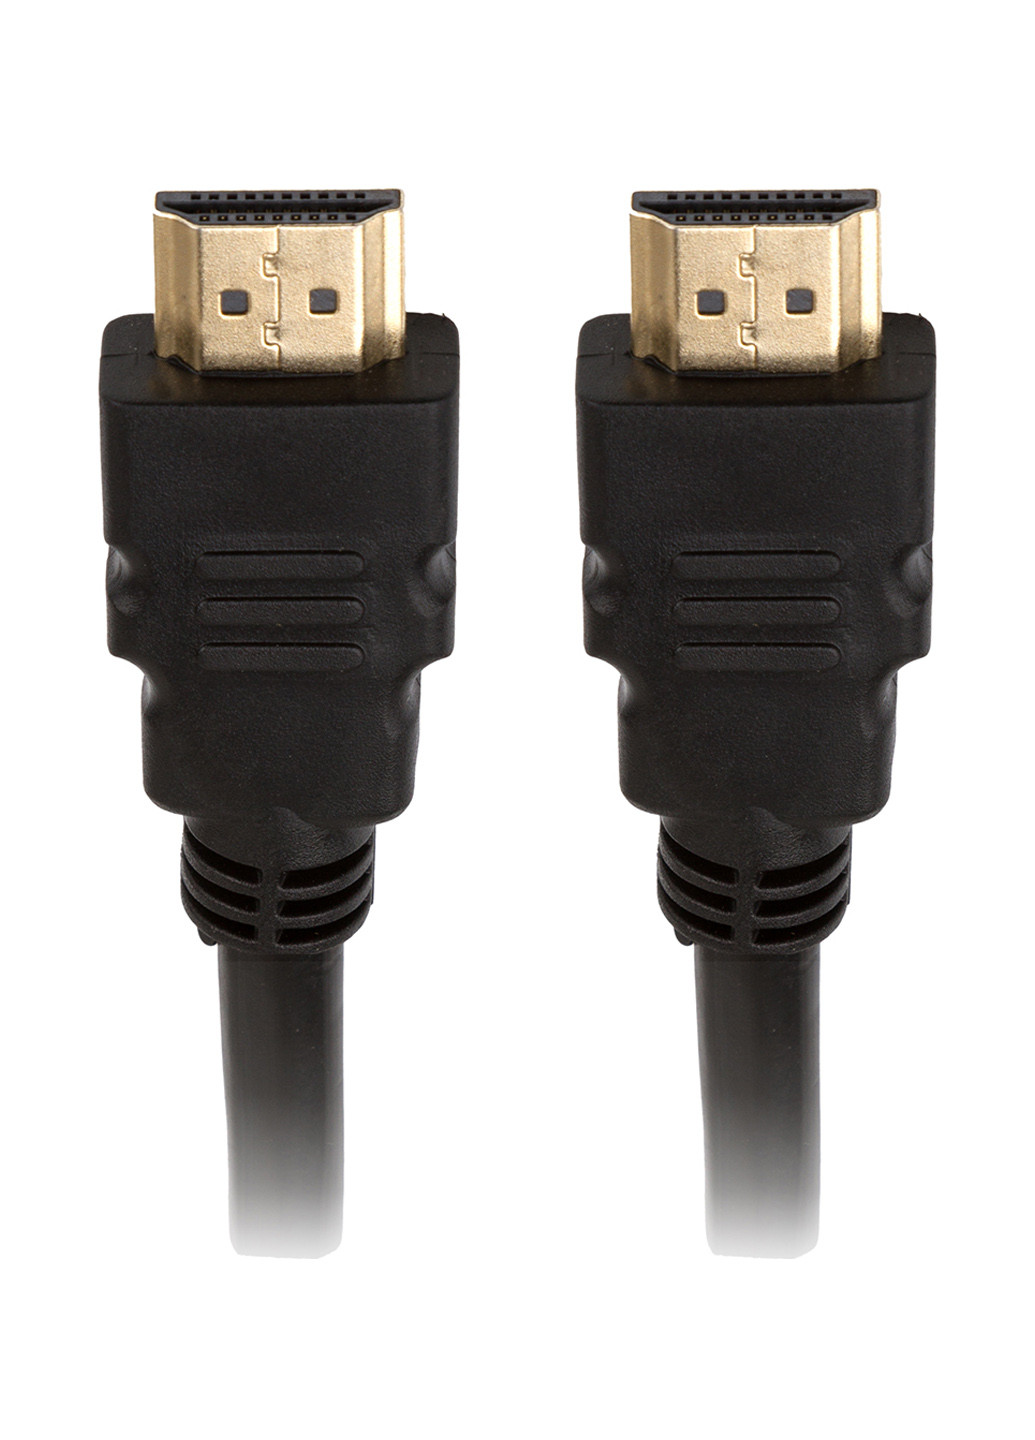 Кабель HDMI 1.4 v, 10 м (100100) CHARMOUNT кабель charmount hdmi 1.4 v, 10 м (100100) (145607410)